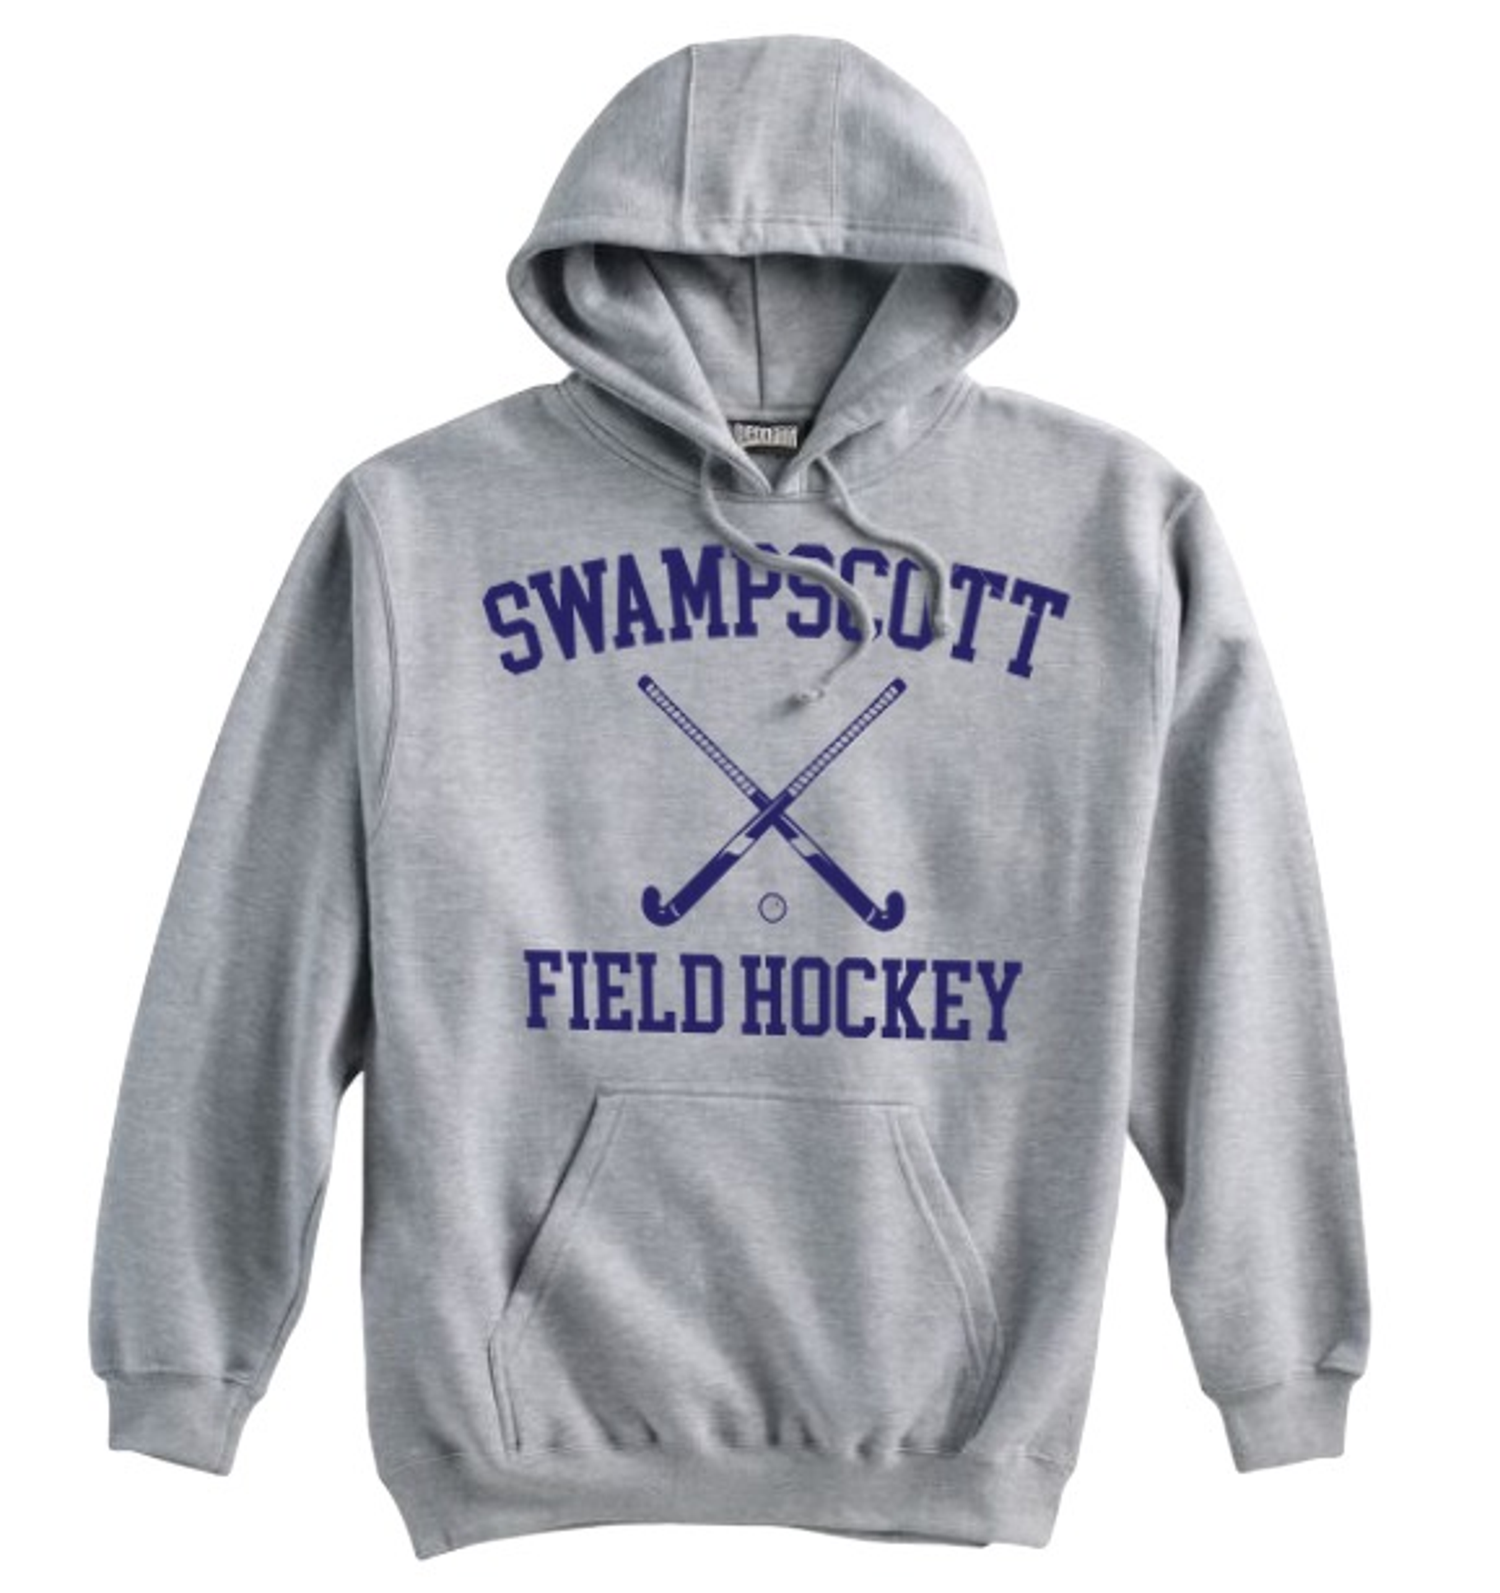 Swampscott Field Hockey Premium Hoodie